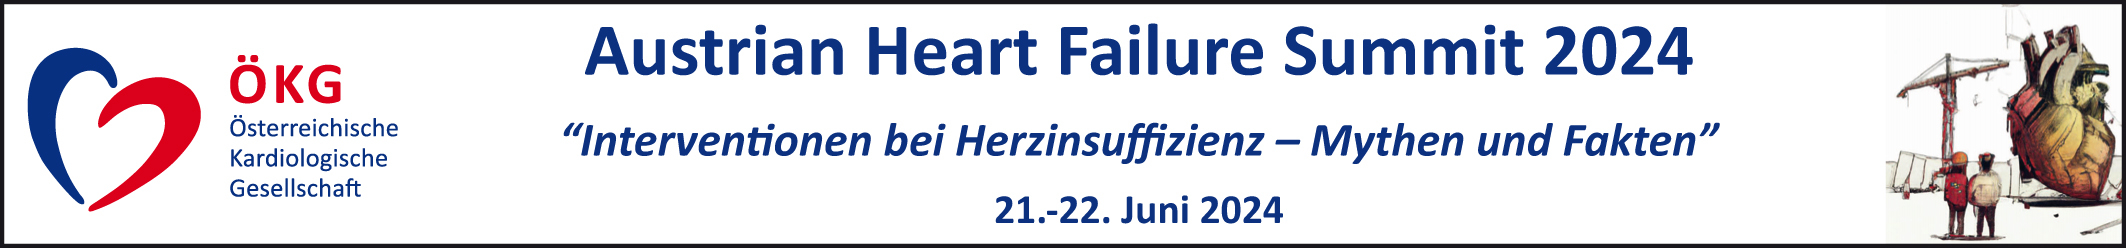 Austrian Heart Failure Summit 2024